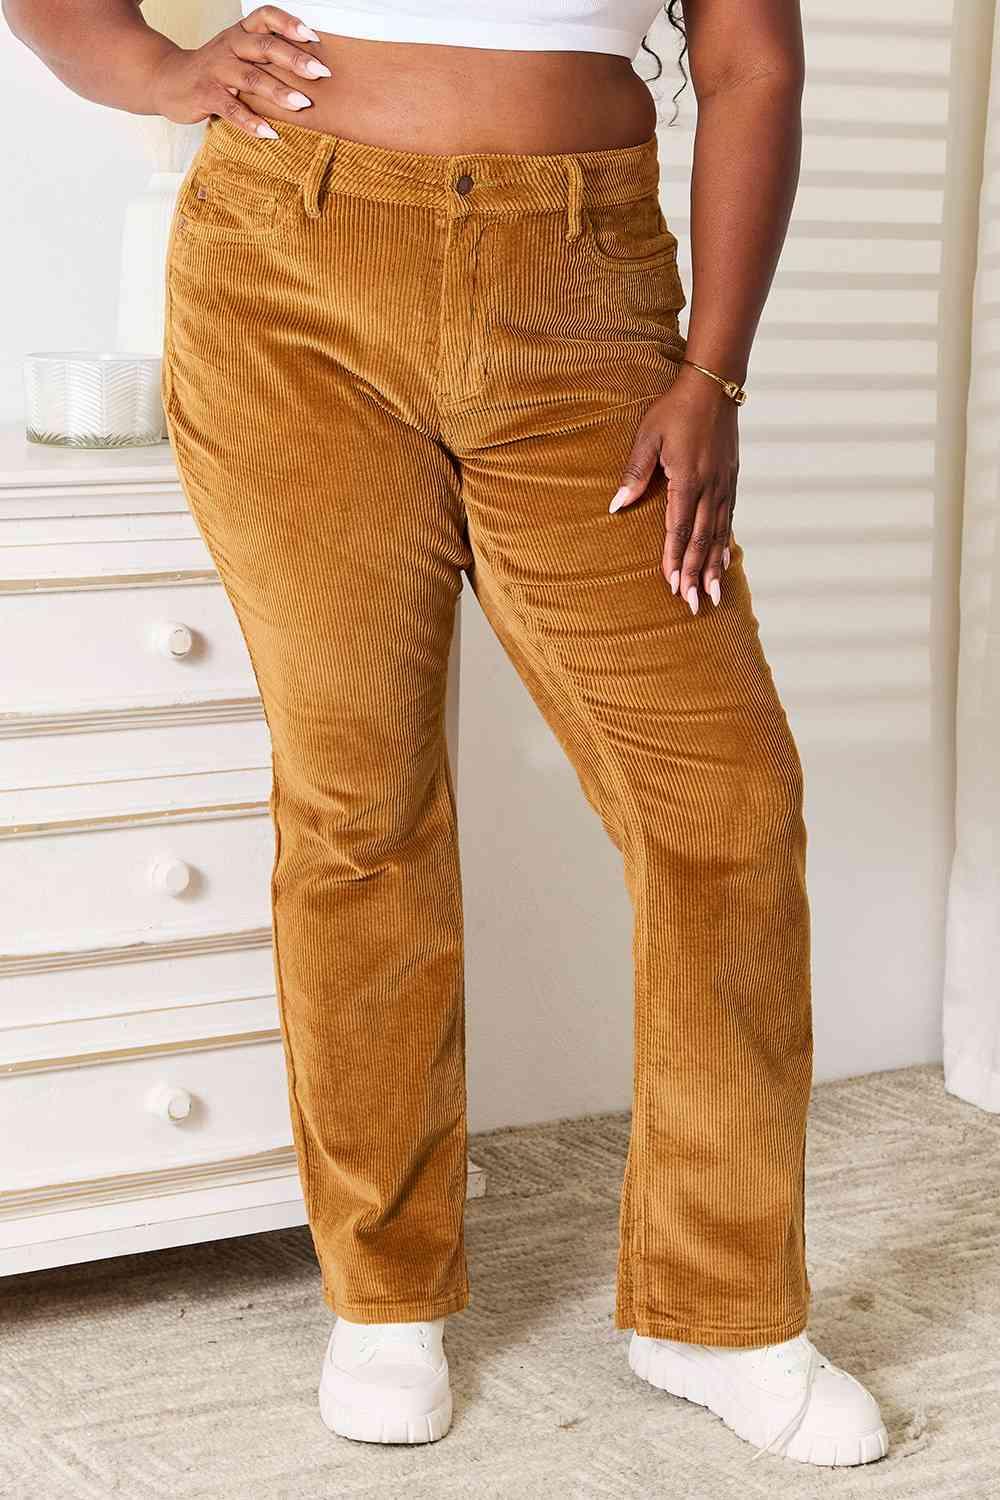 Bona Fide Fashion - Full Size Mid Rise Corduroy Pants - Women Fashion - Bona Fide Fashion